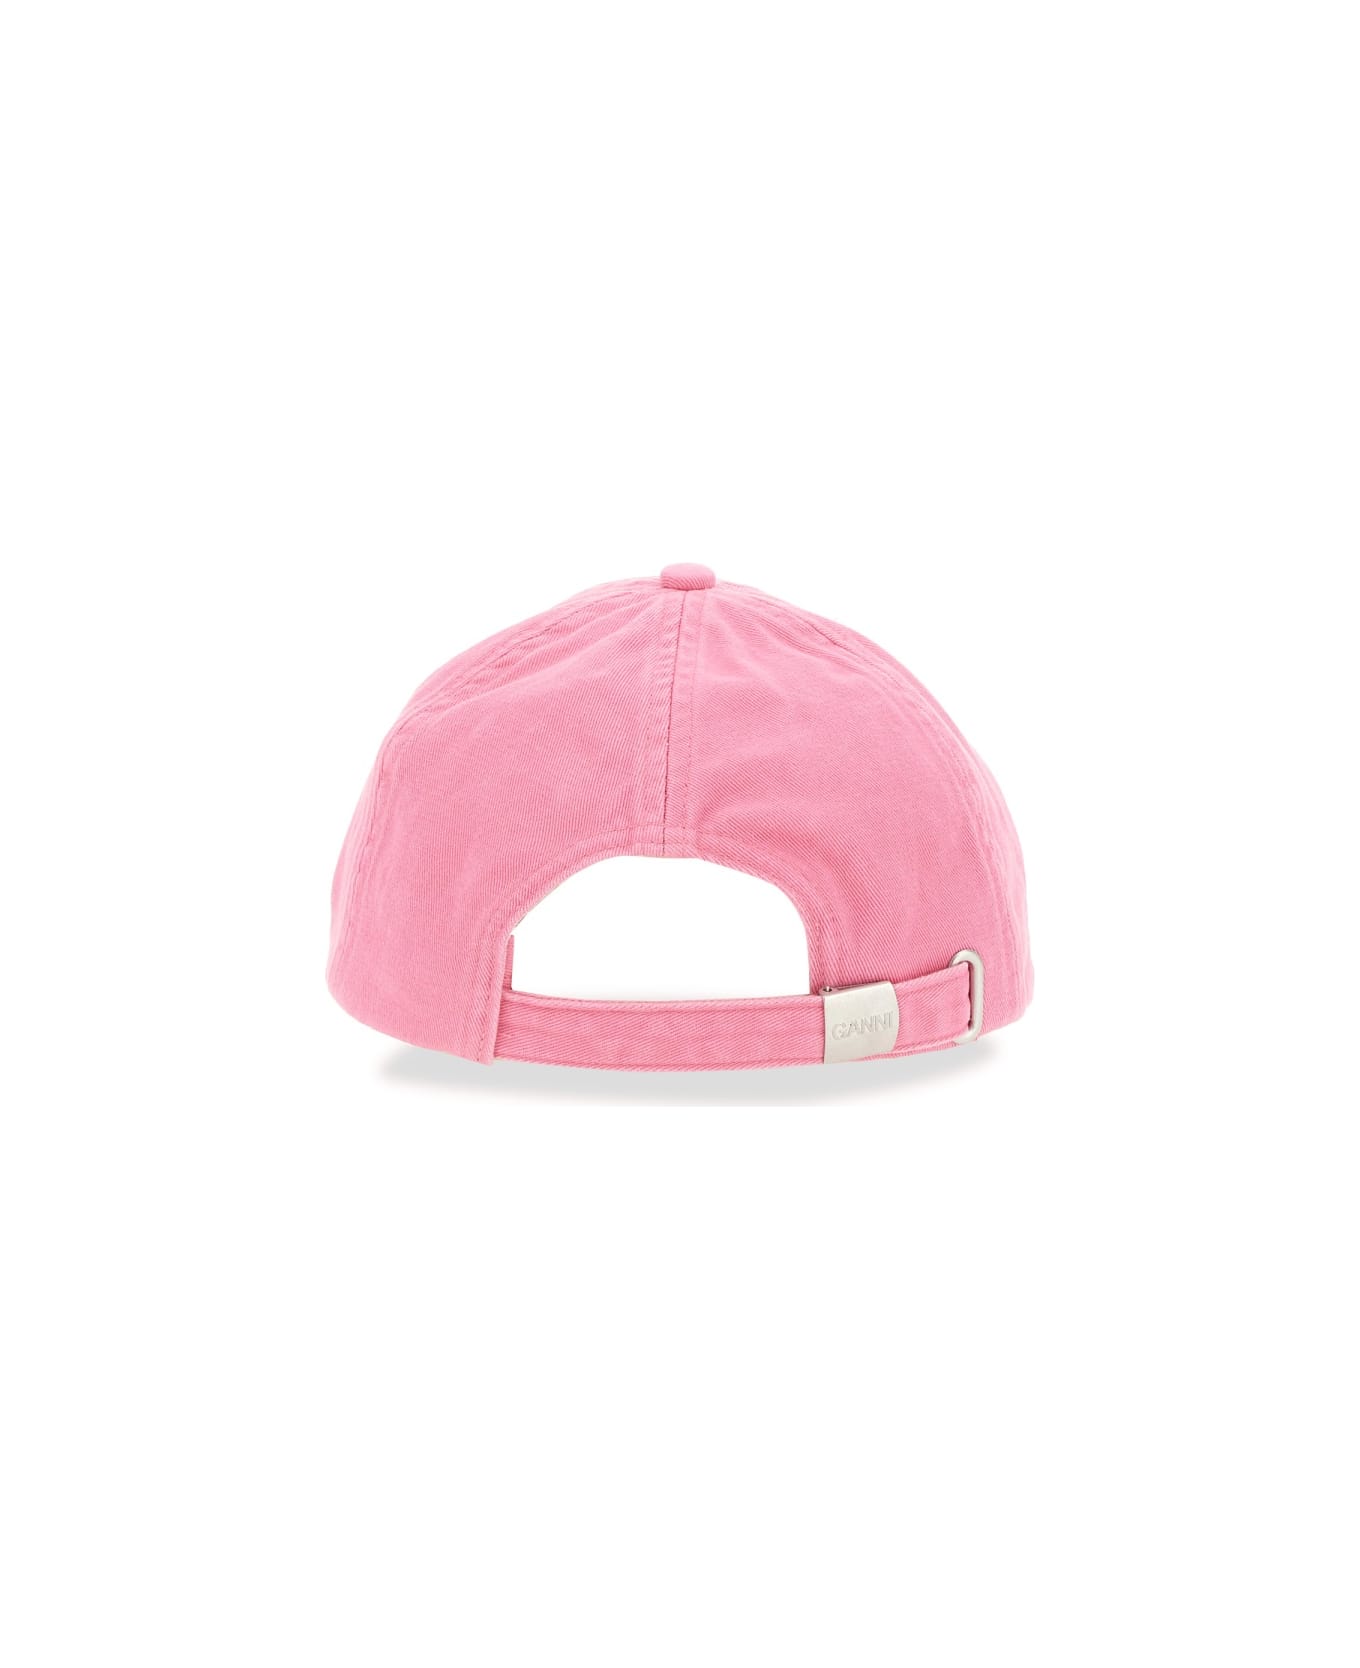 Ganni Baseball Cap - Pink